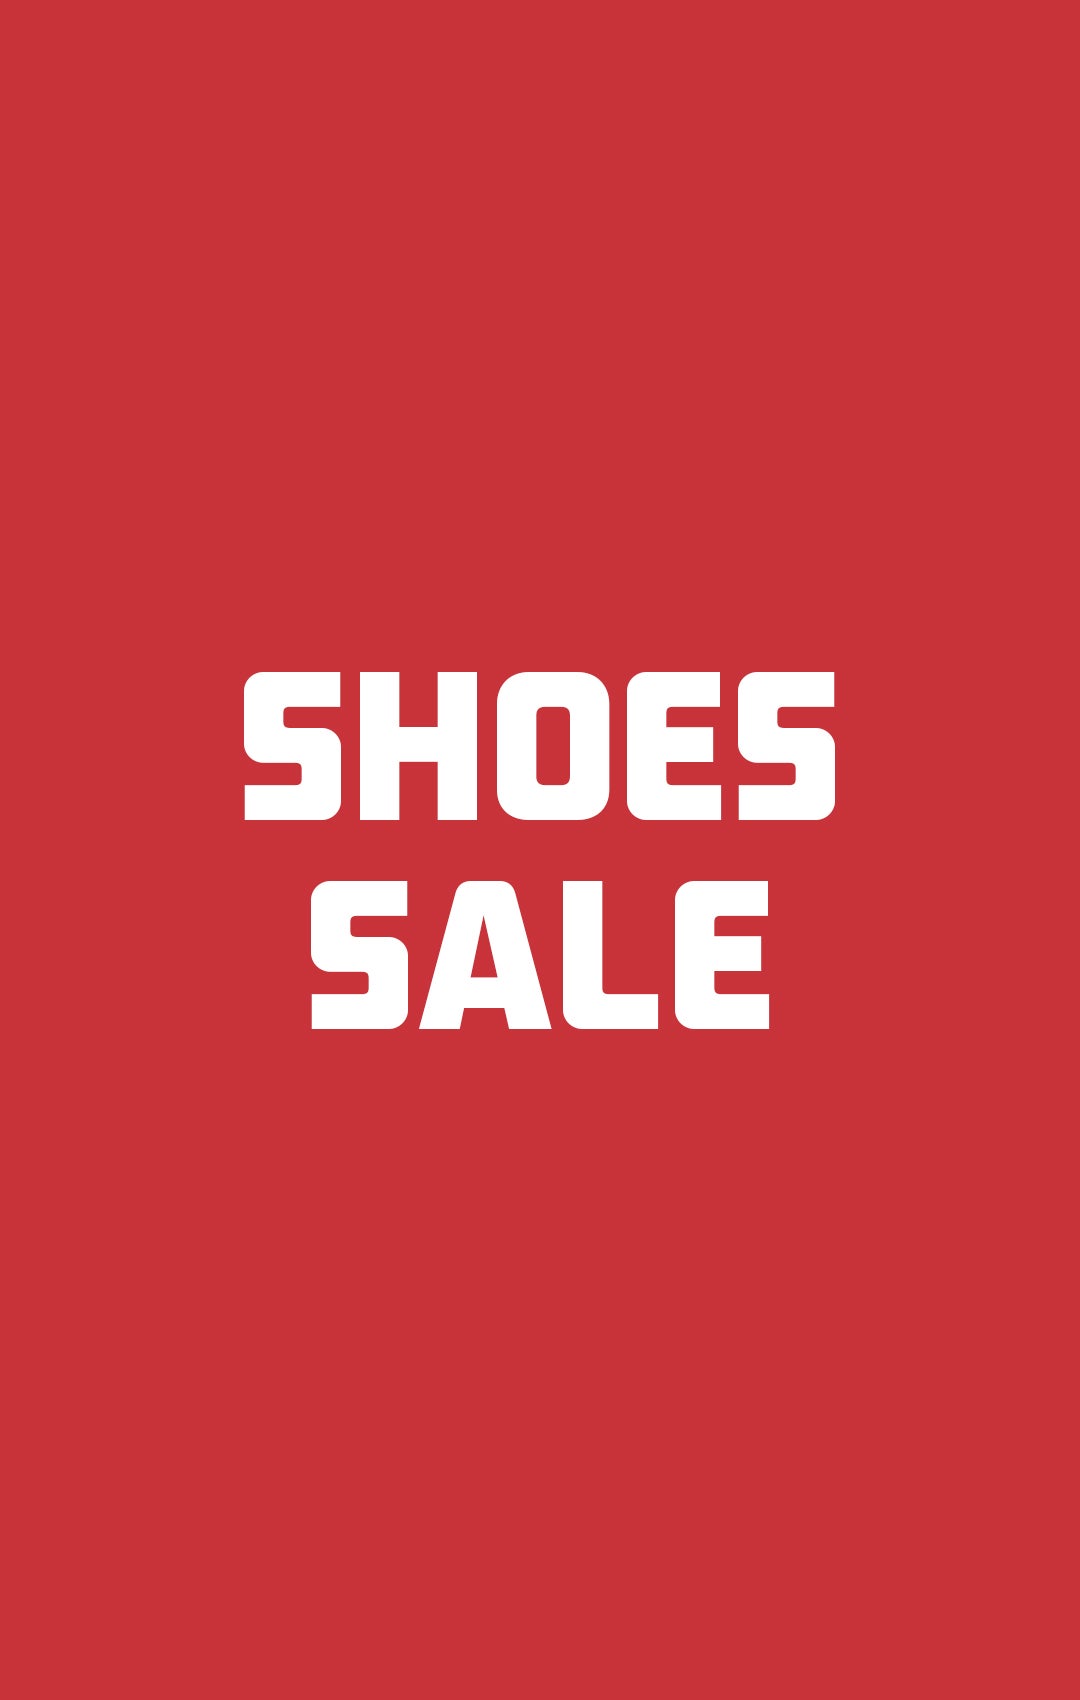 Men's Sale Shoes, Clothing, Accessories, & Equipment